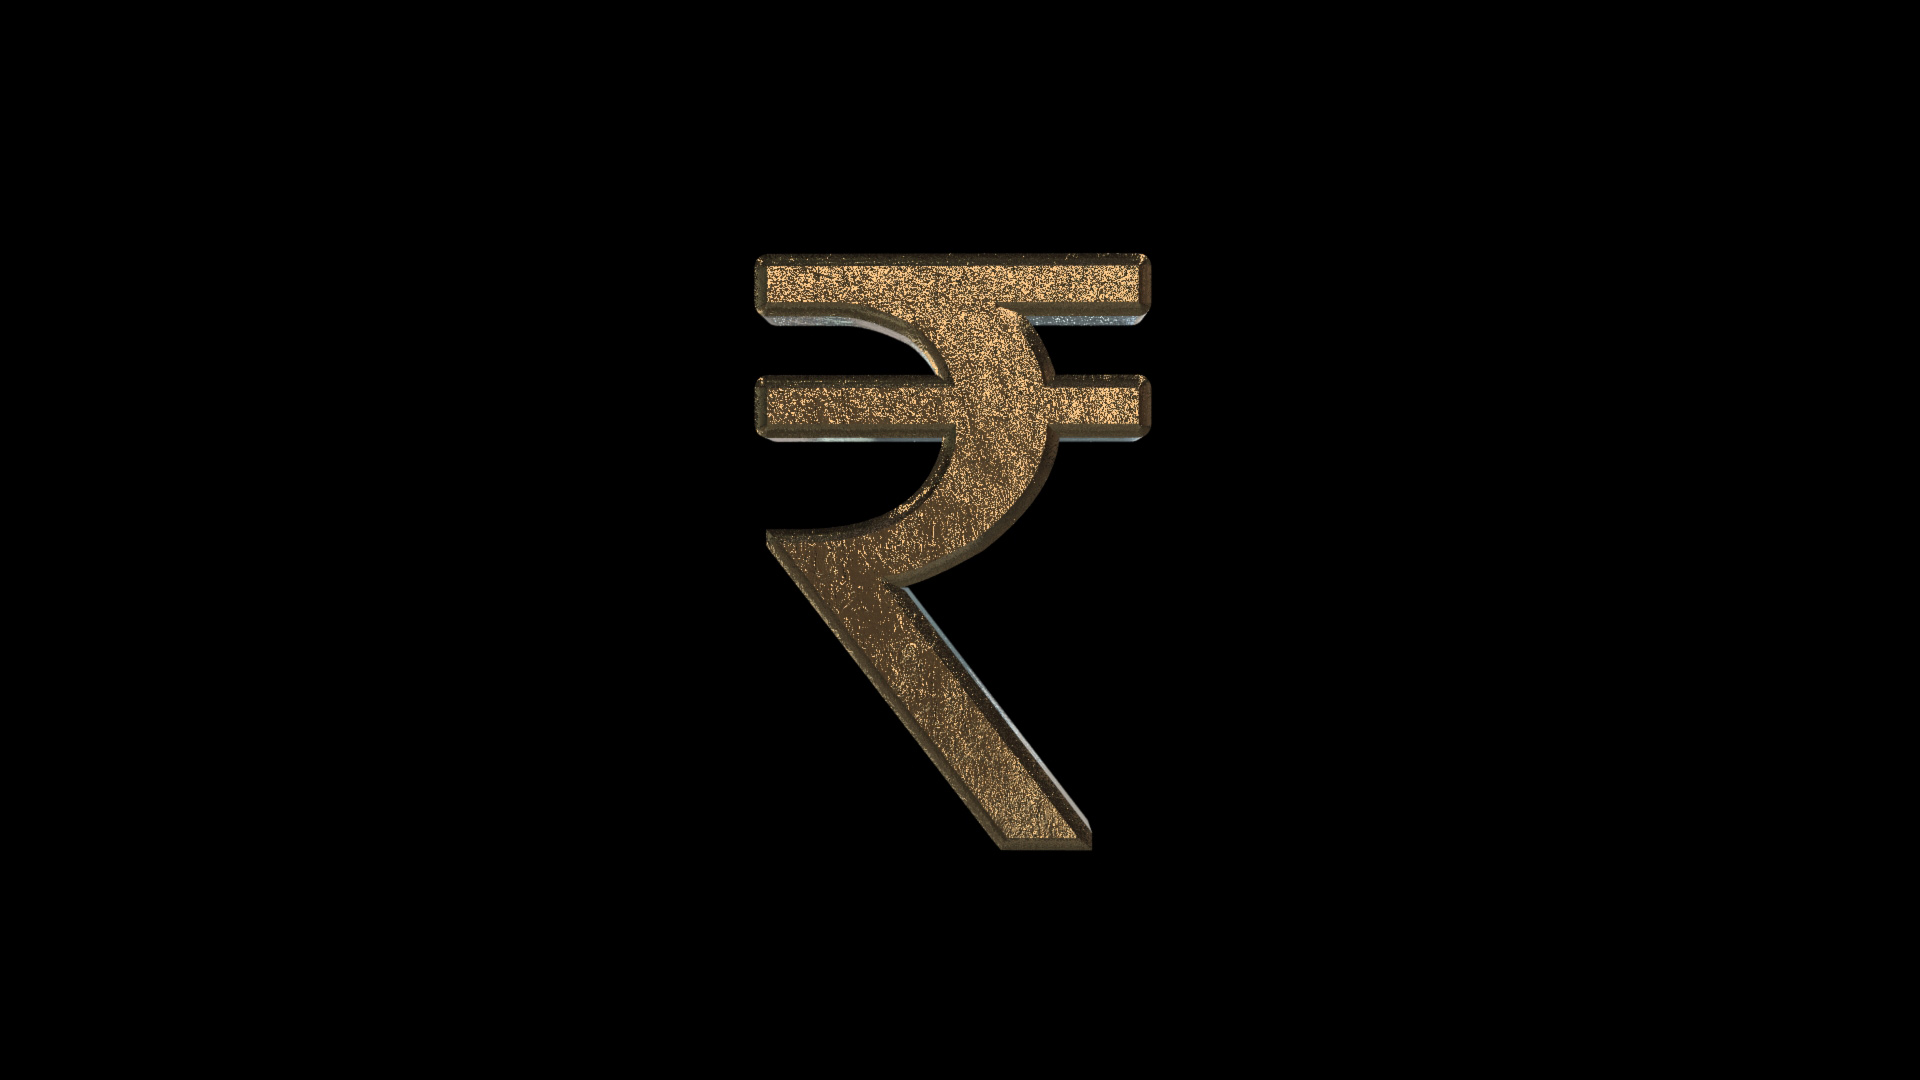 3D Golden Raa Indian currency symbol